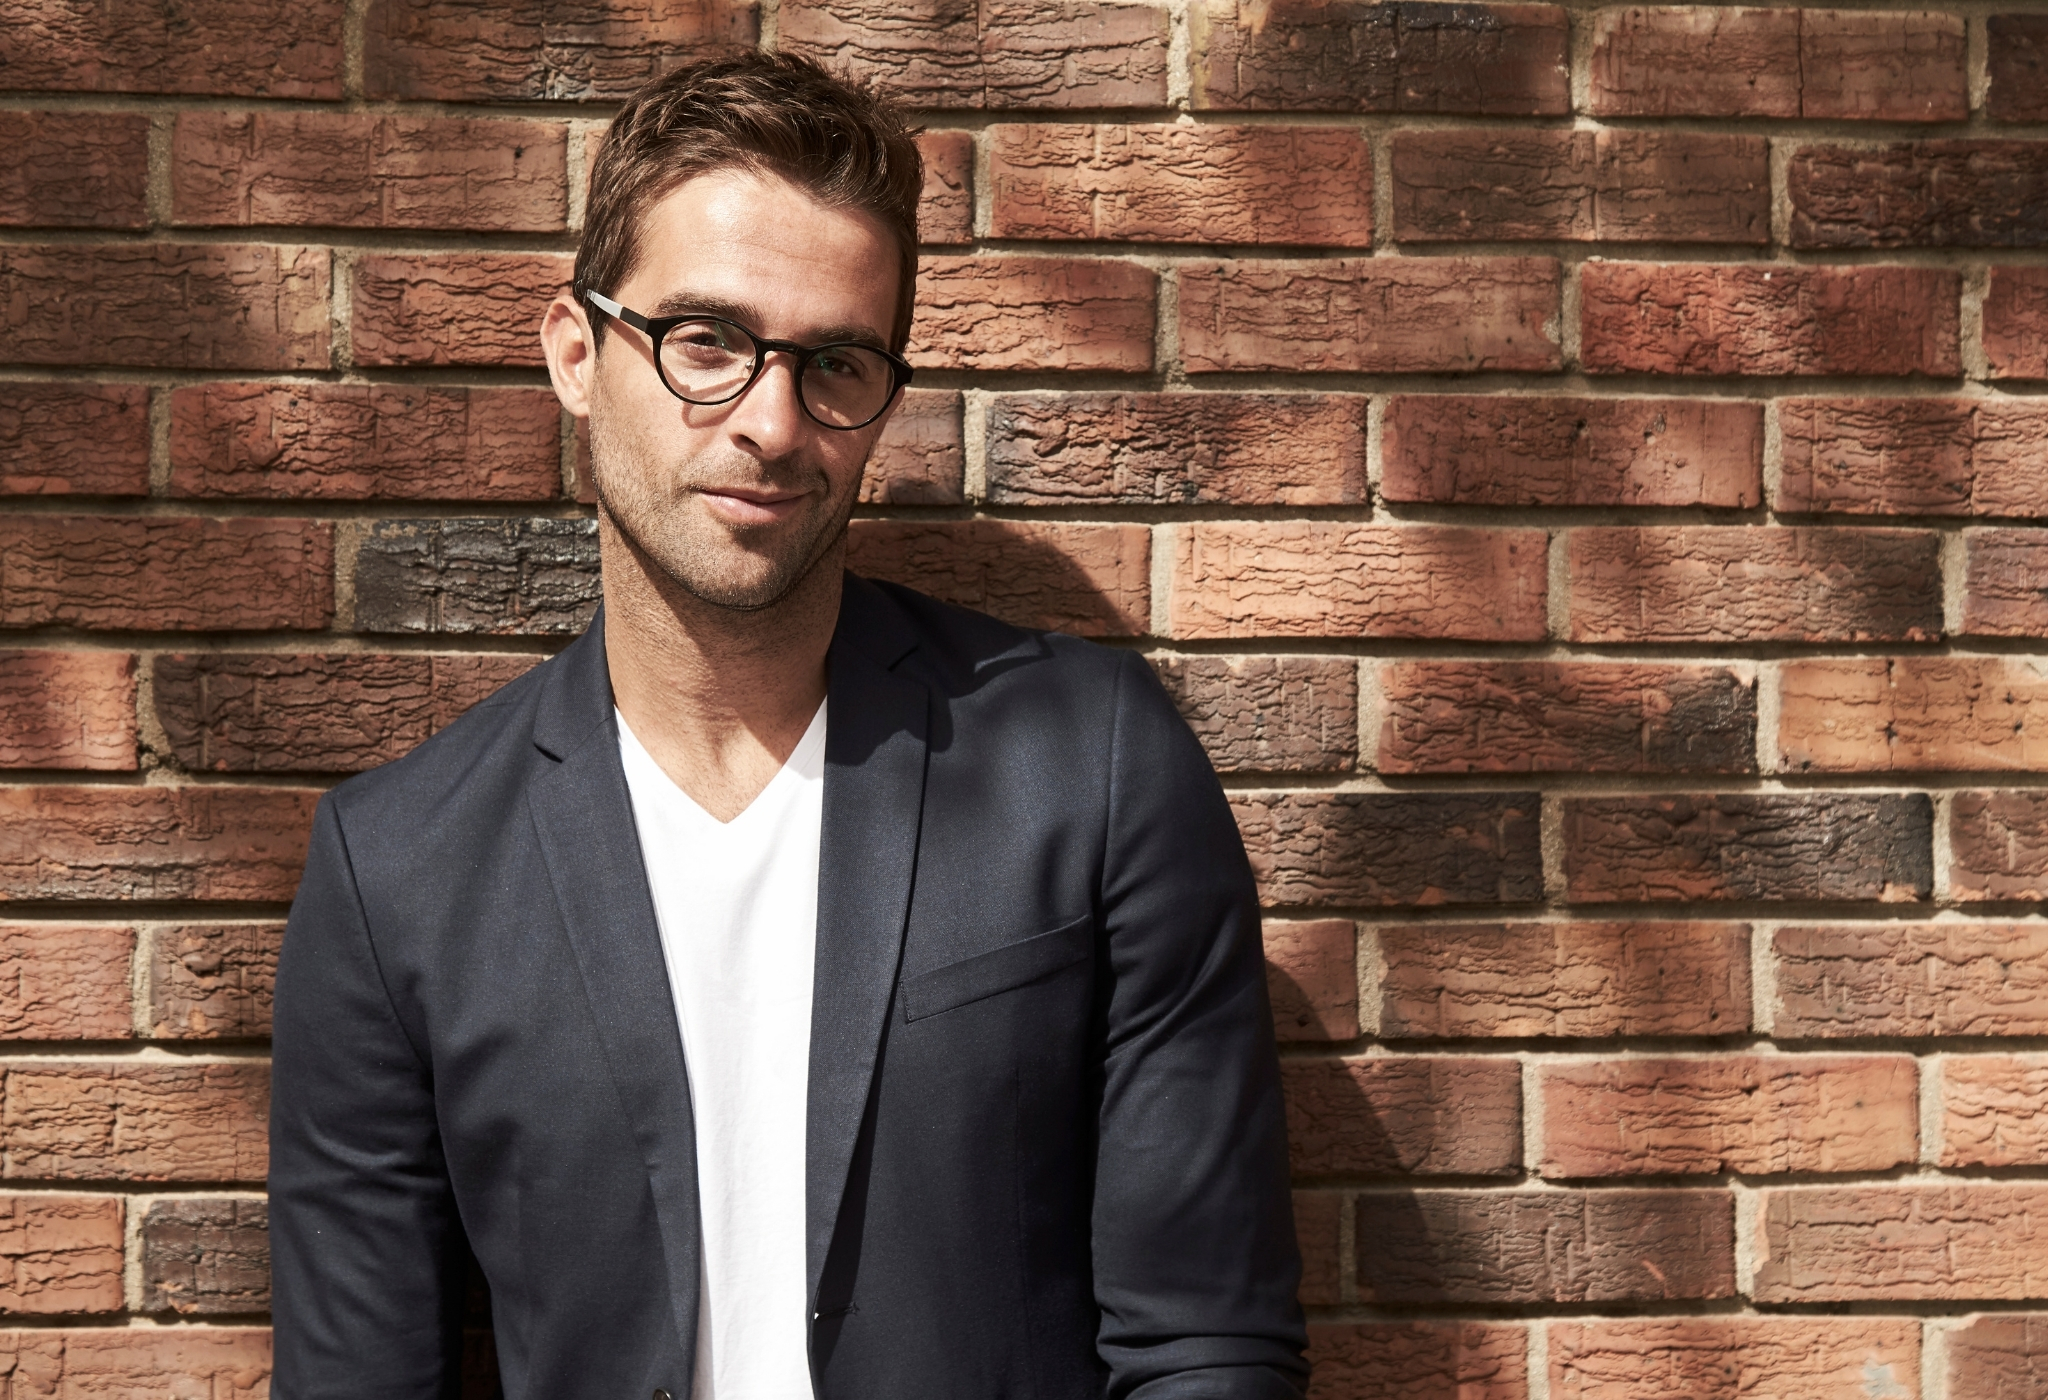 How To Look GREAT In Glasses (MEN) | Find The Best Men's Eyeglasses